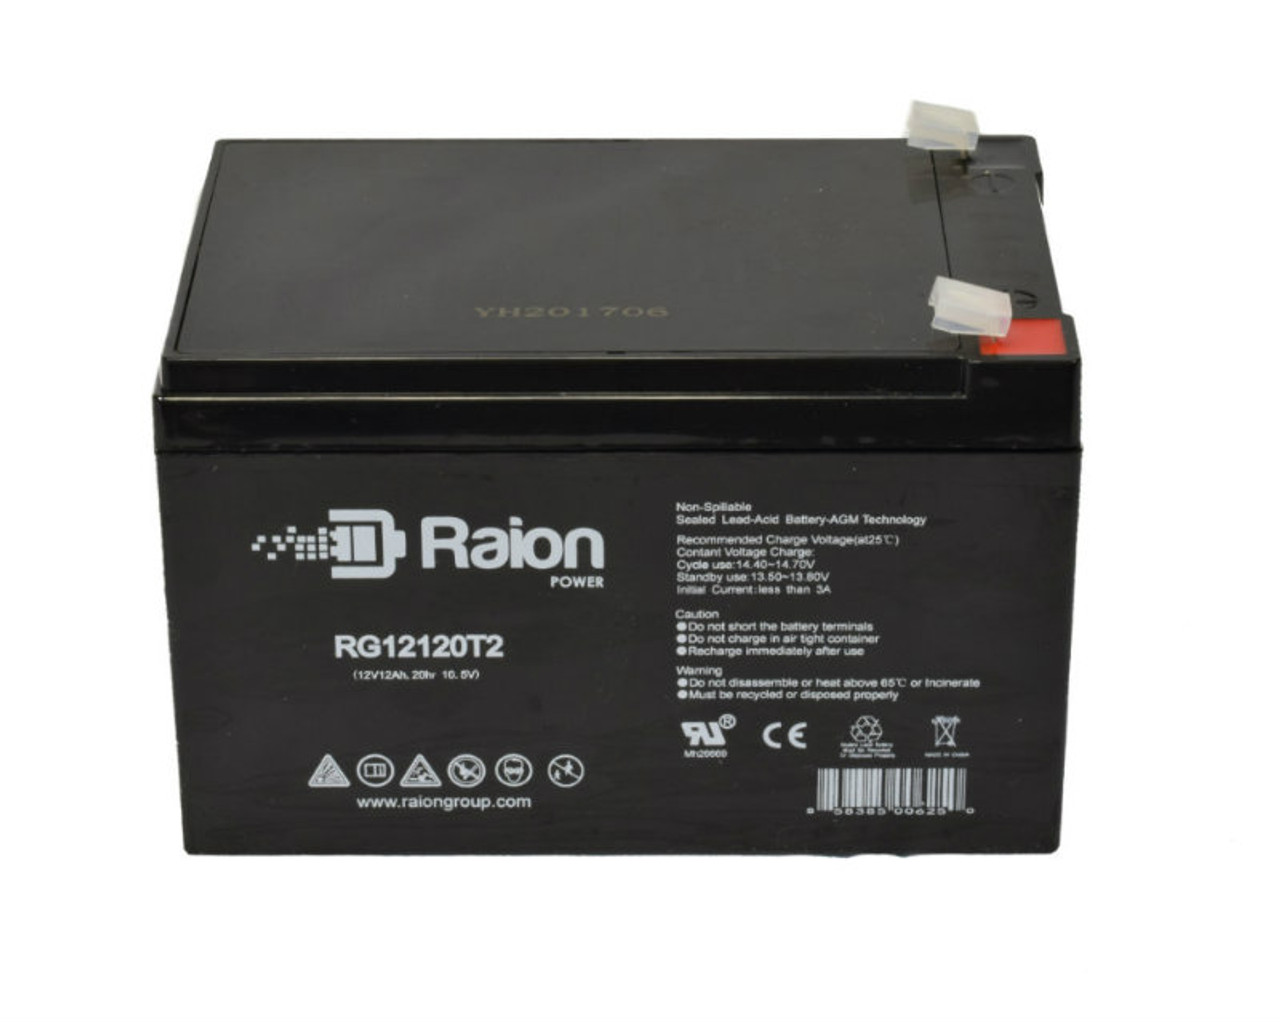 Raion Power RG12120T2 SLA Battery for Energenie BAT-12V12AH